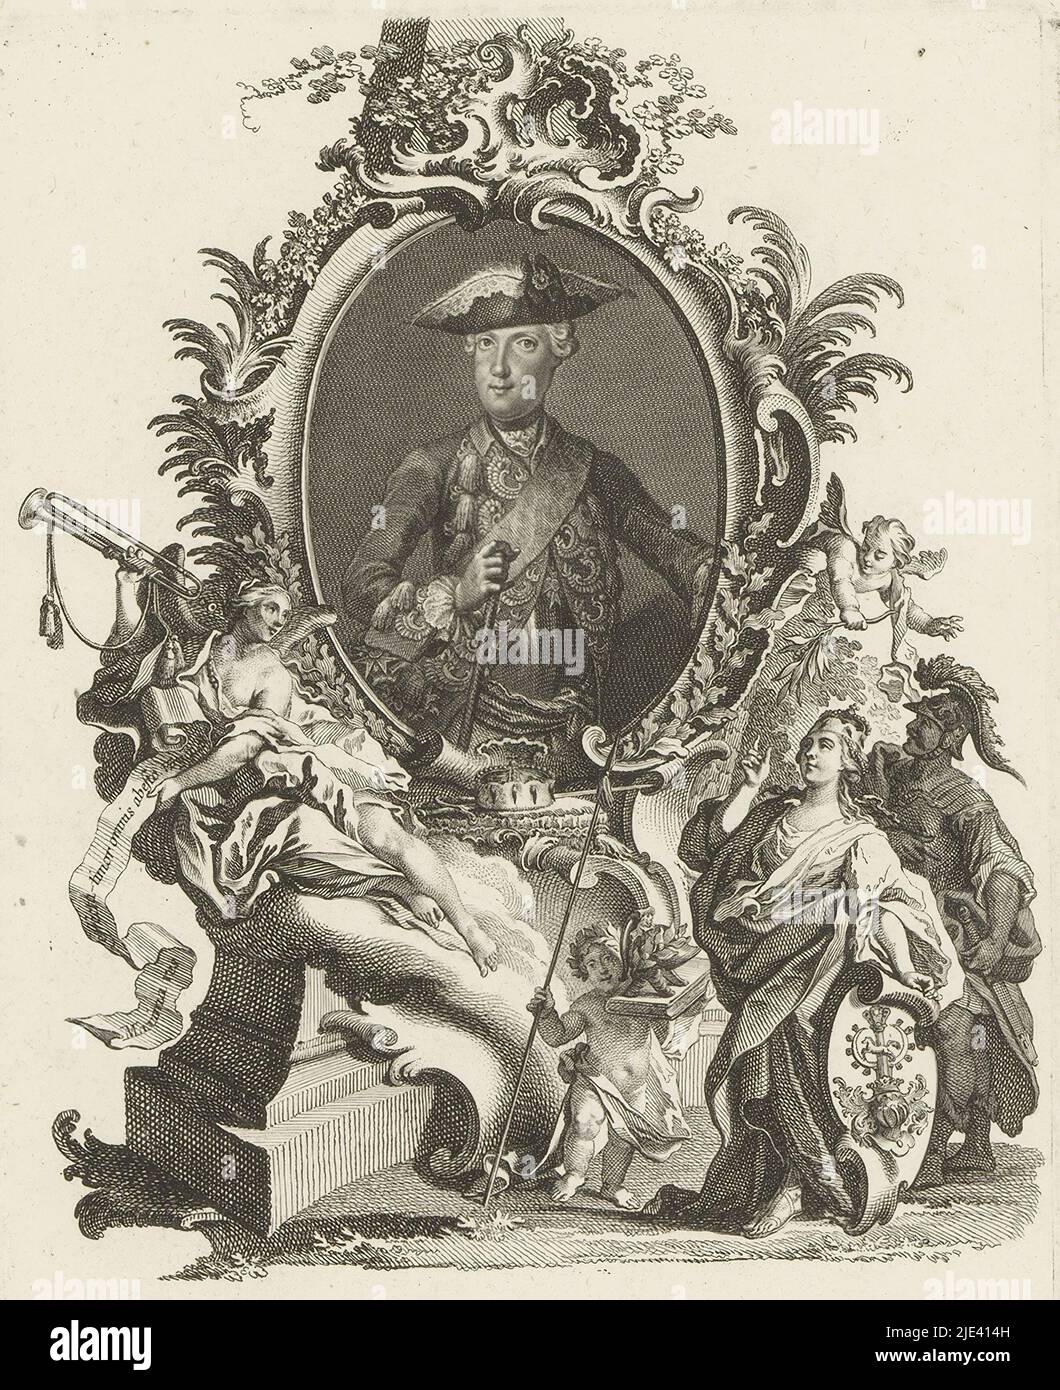 Portrait of Ferdinand Duke of Brunswick-Lüneburg, Johann Esaias Nilson, after de Morgens, 1741 - 1788, print maker: Johann Esaias Nilson, (mentioned on object), after: de Morgens, (mentioned on object), Augsburg, 1741 - 1788, paper, engraving, etching, h 220 mm - w 160 mm Stock Photo